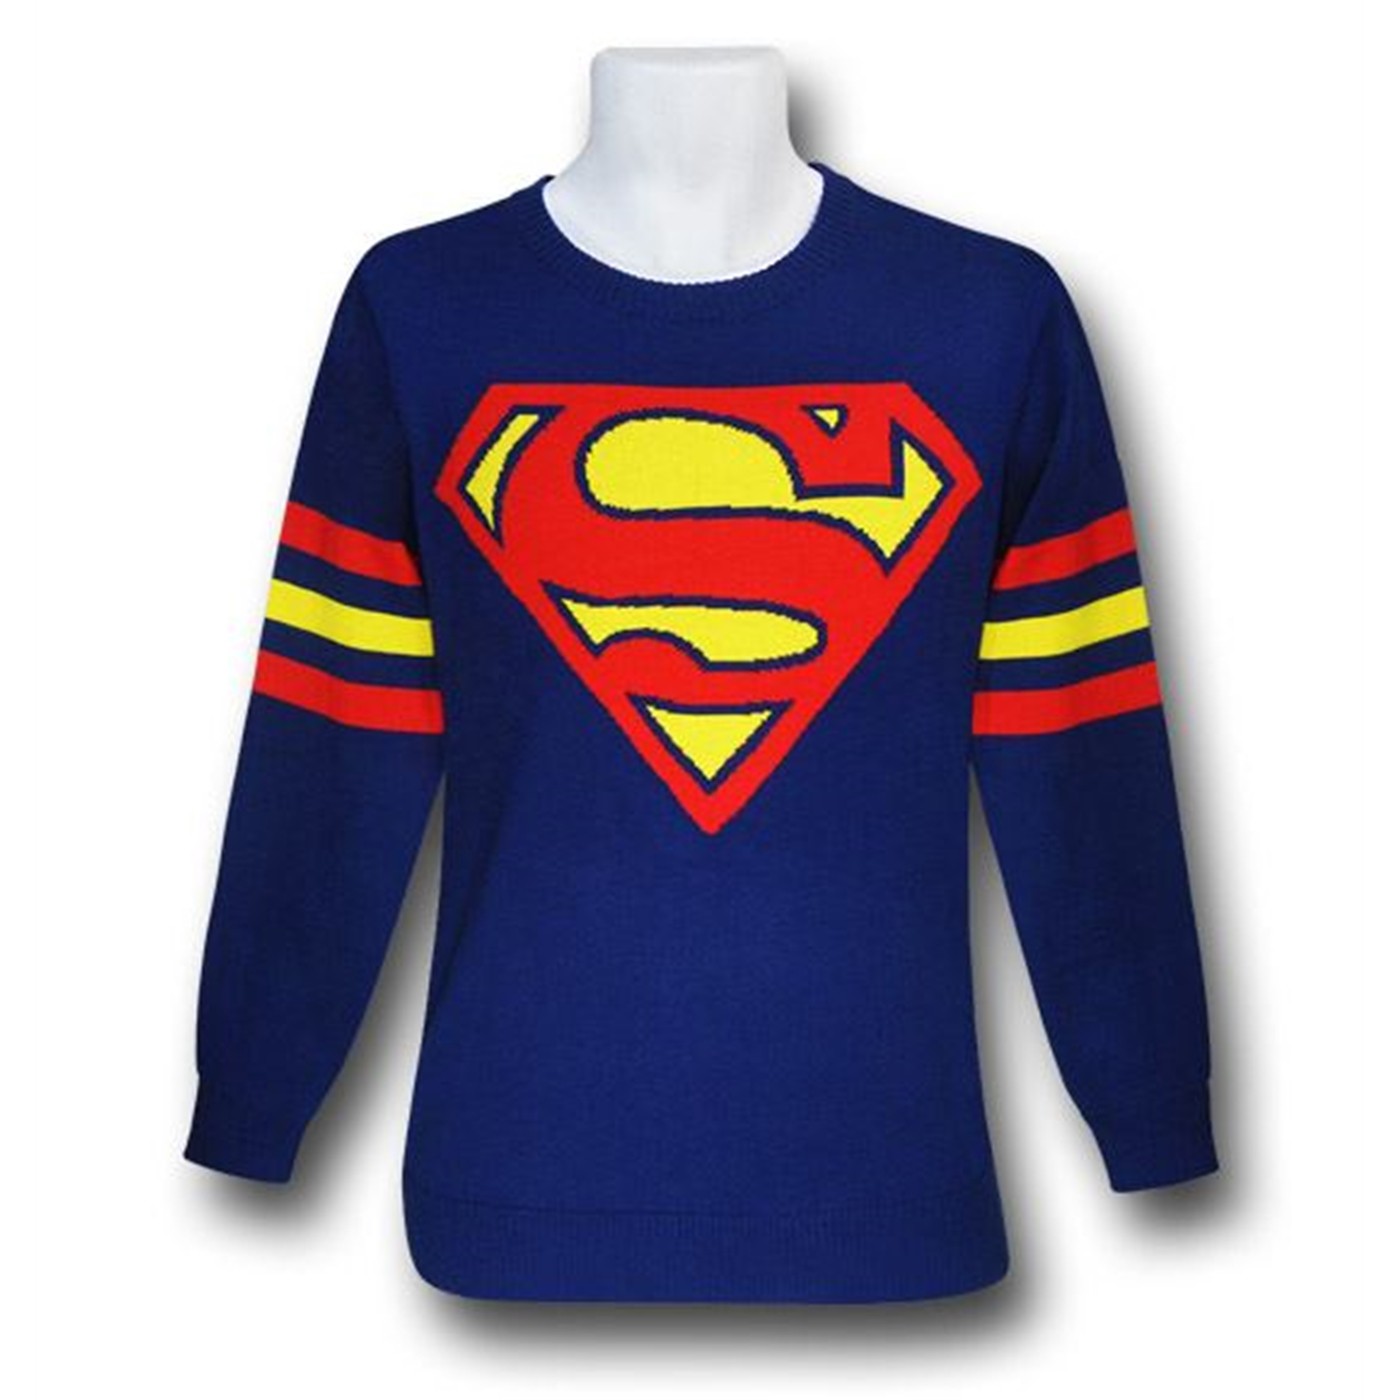 Superman Symbol Blue Sweater w/Striped Arms-Men's Medium - image 1 of 2